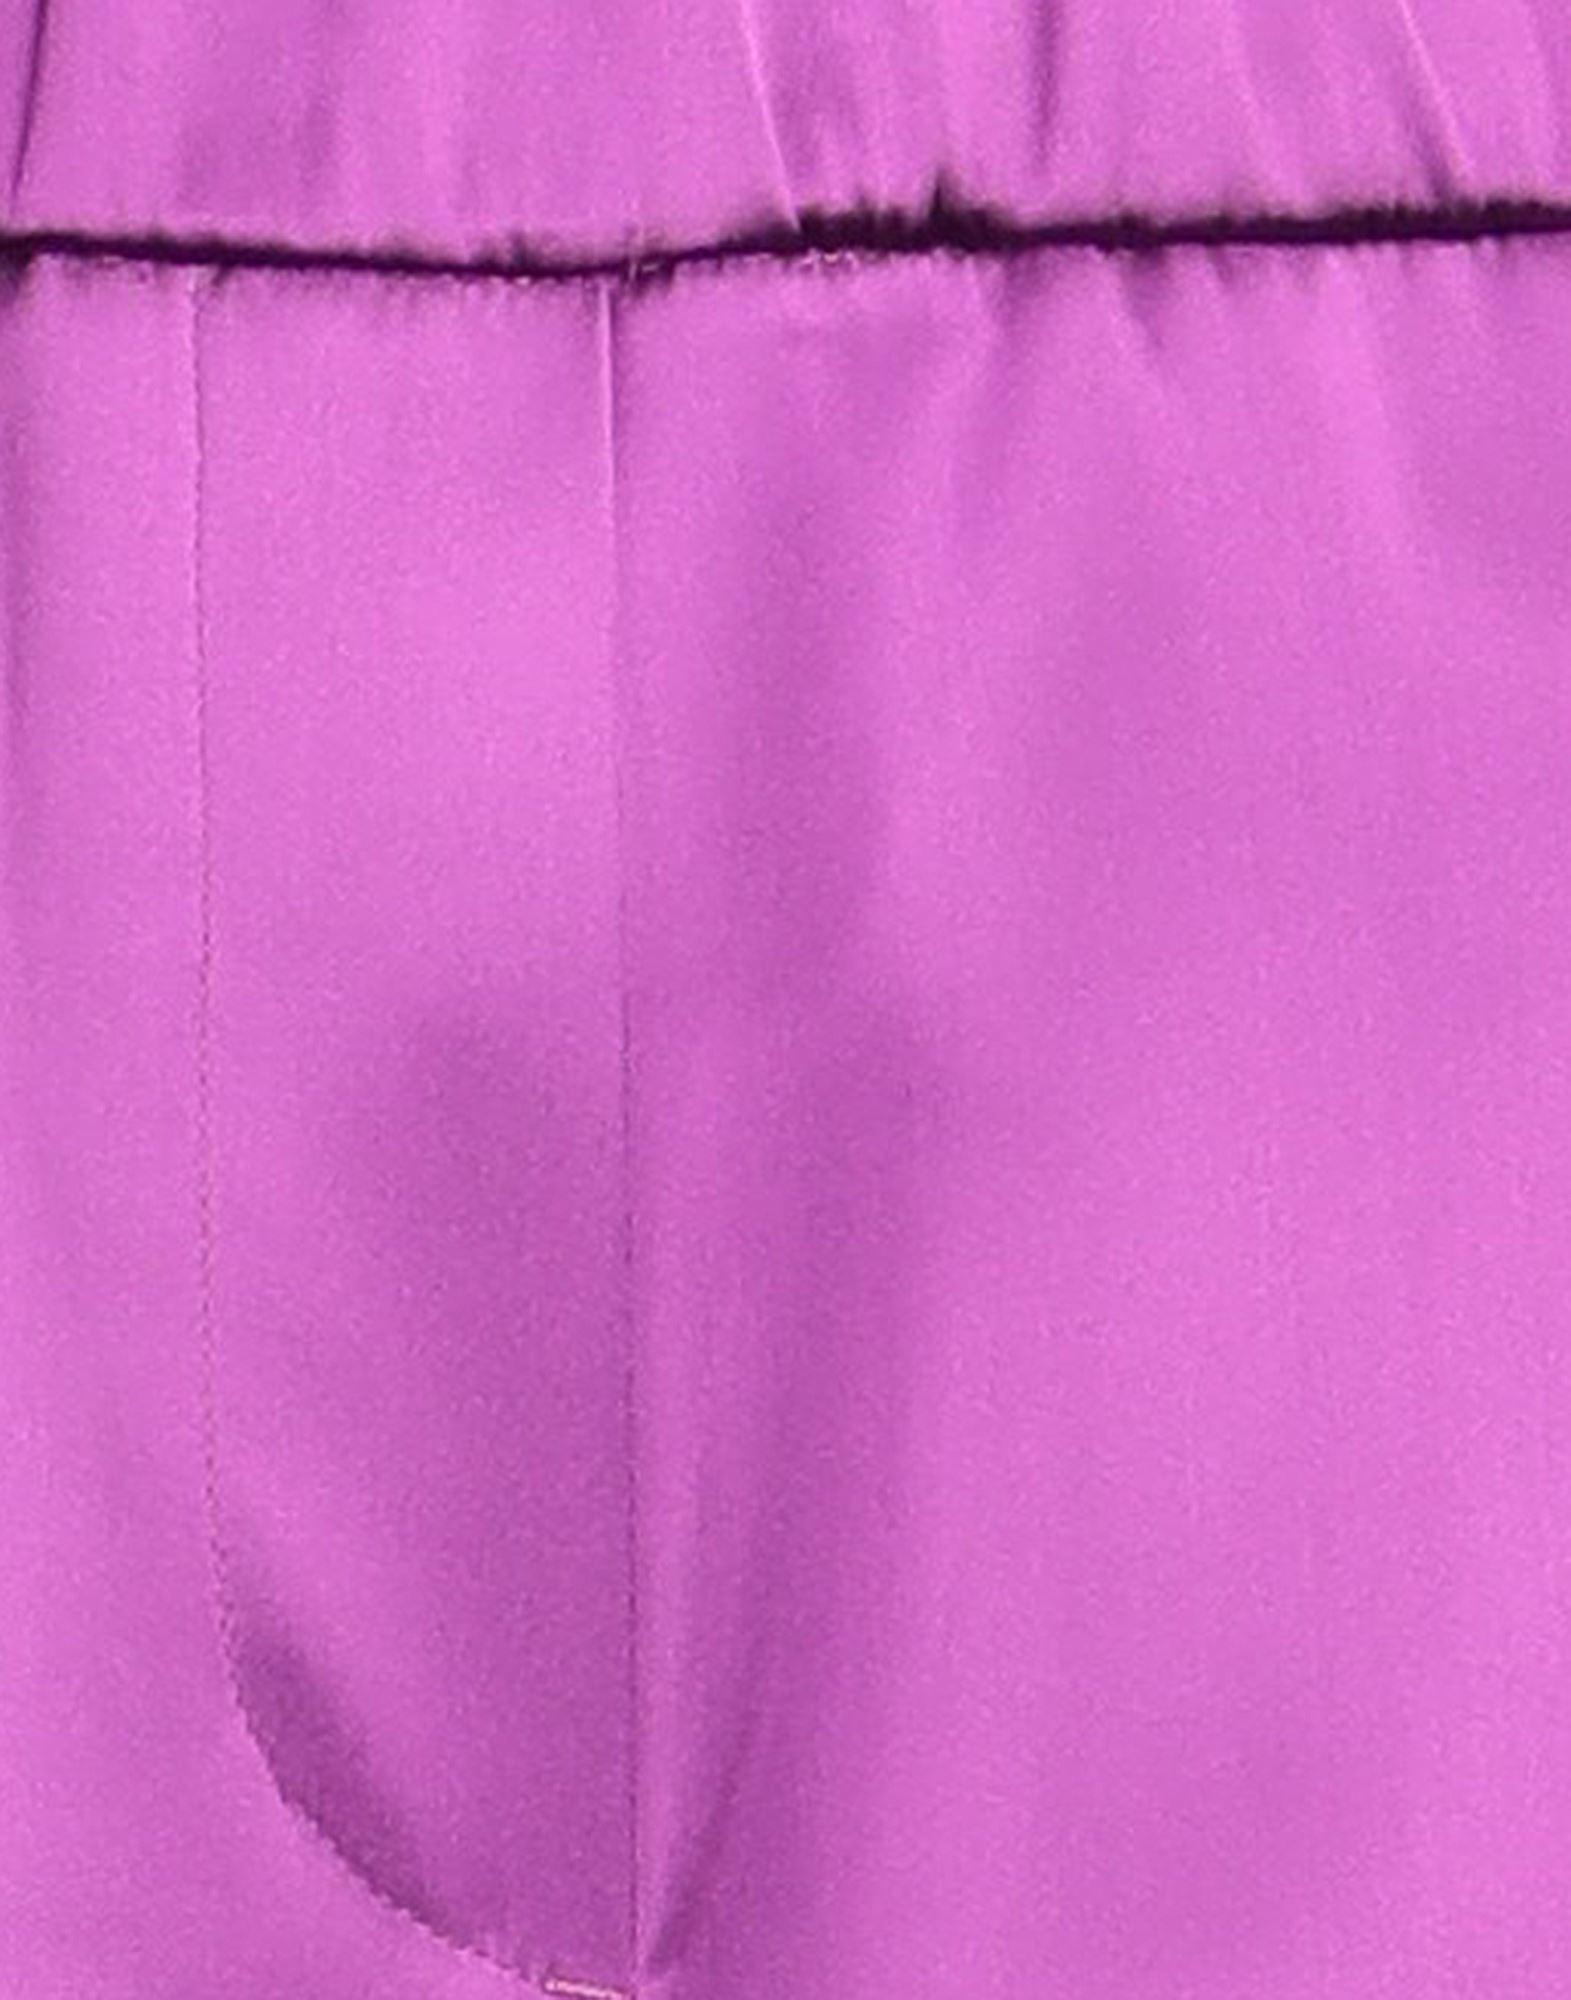 Off-White c/o Virgil Abloh Parachute Pants - Purple